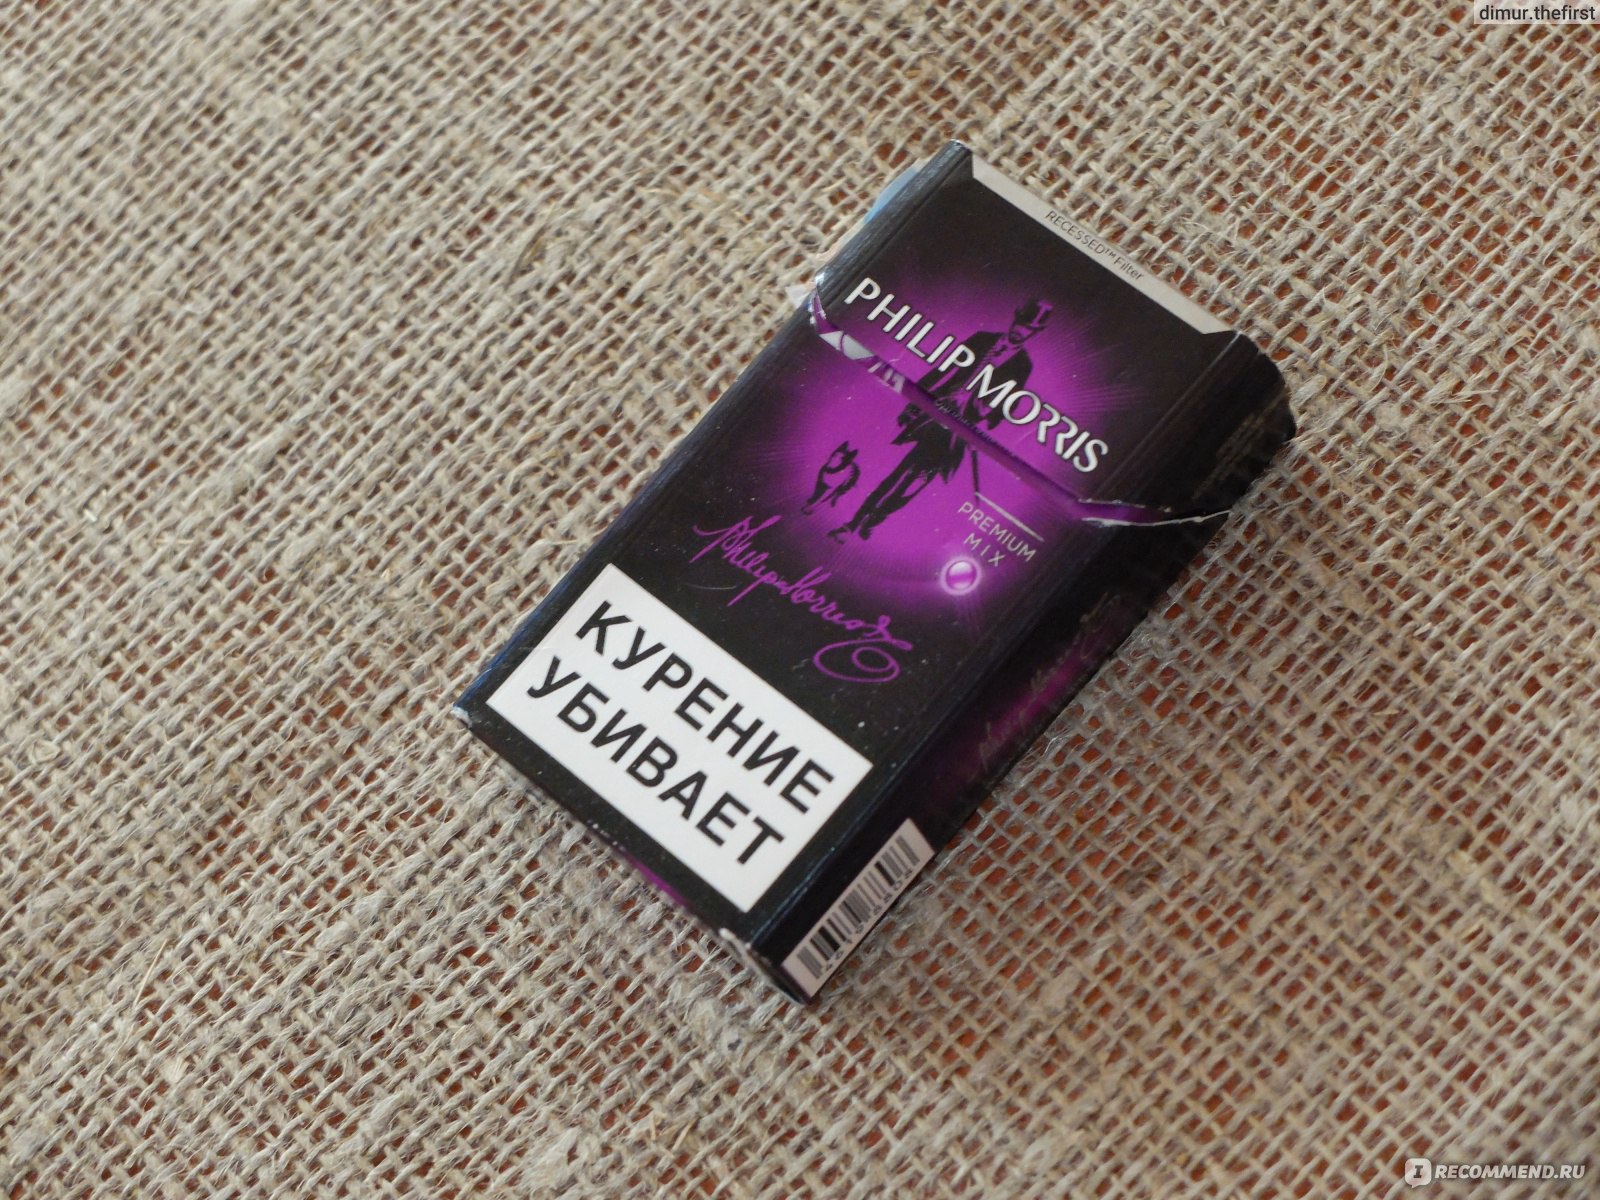 Филип морис фиолетовый. Сигареты Филип Моррис с кнопкой фиолетовой. Сигареты Philip Morris с фиолетовой кнопкой.